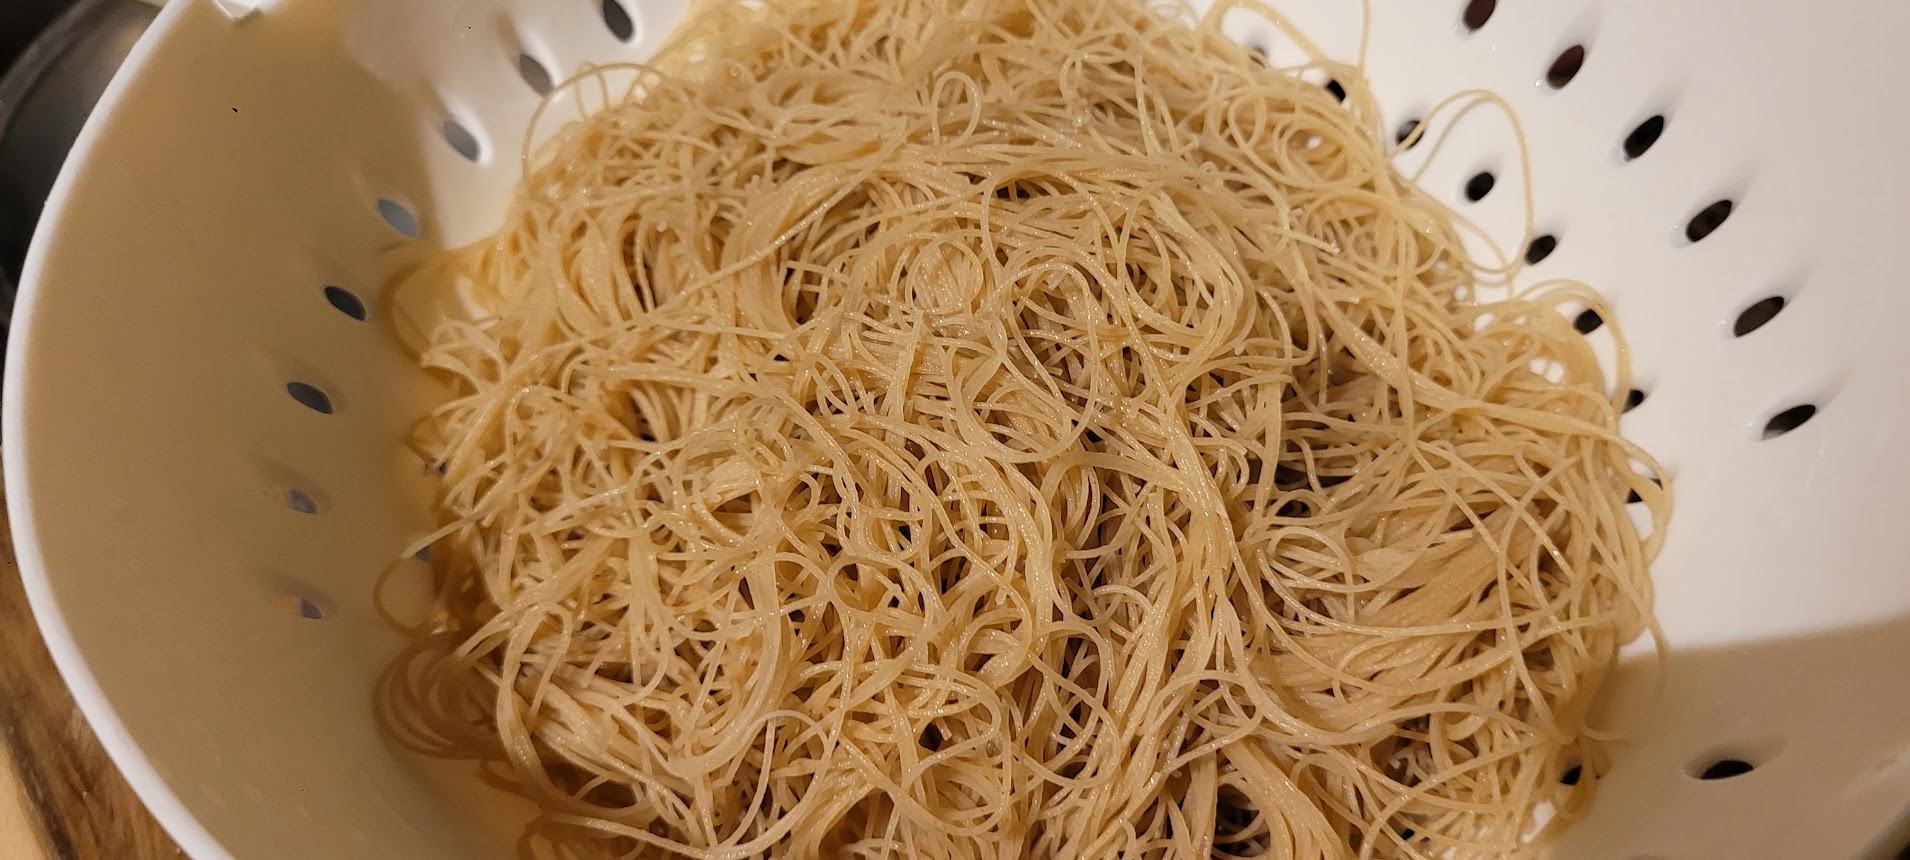 Moms-Thai-Chicken-Noodle-Recipe-Straining-the-Noodles